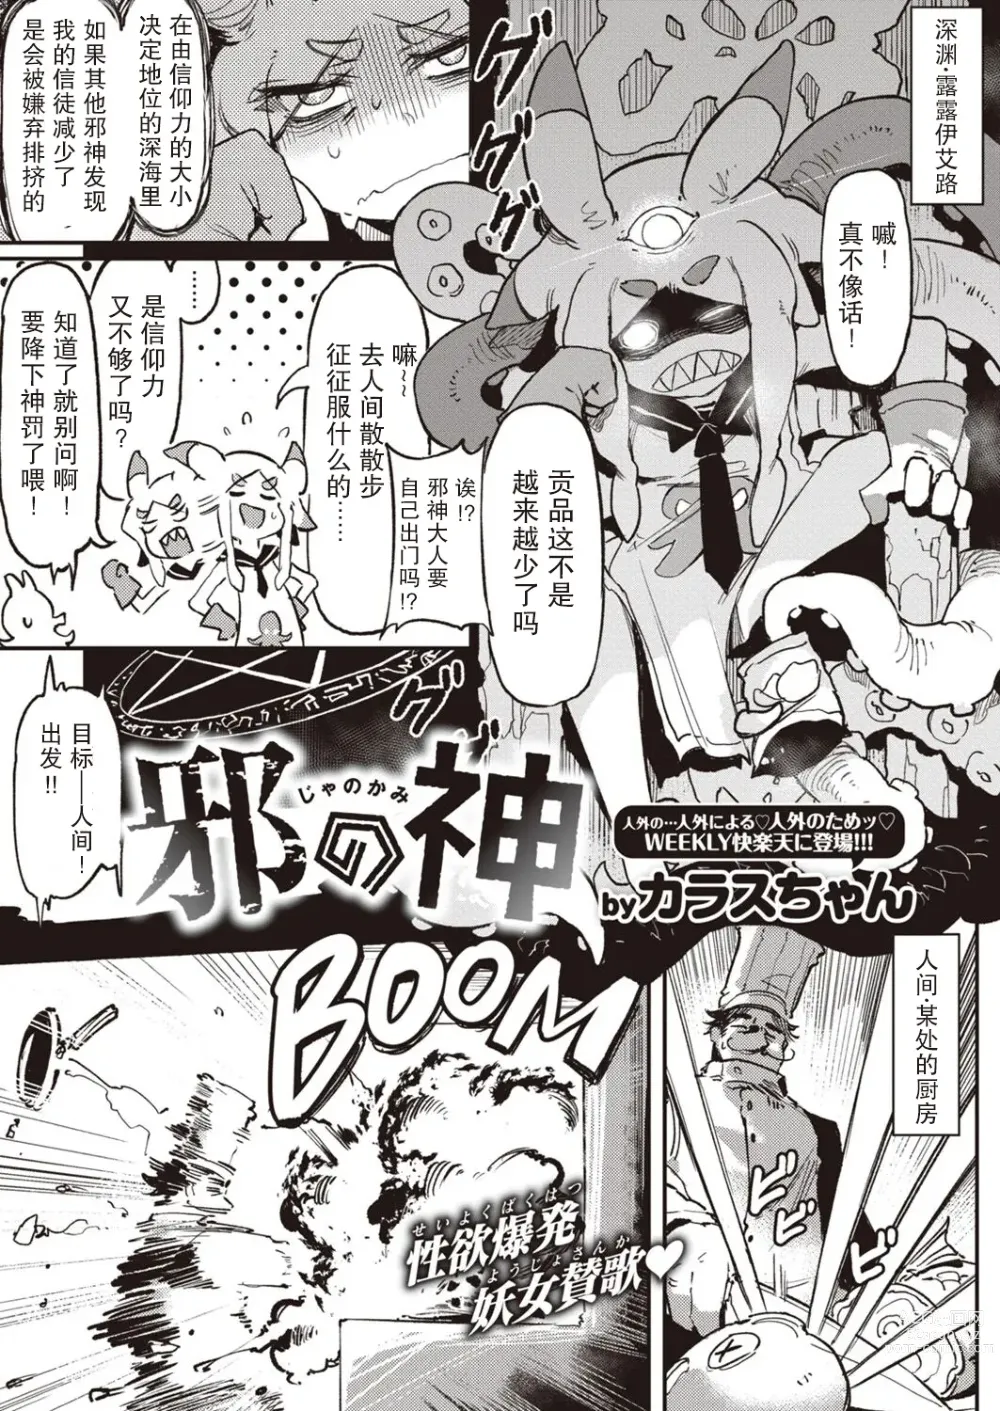 Page 3 of manga Inogami